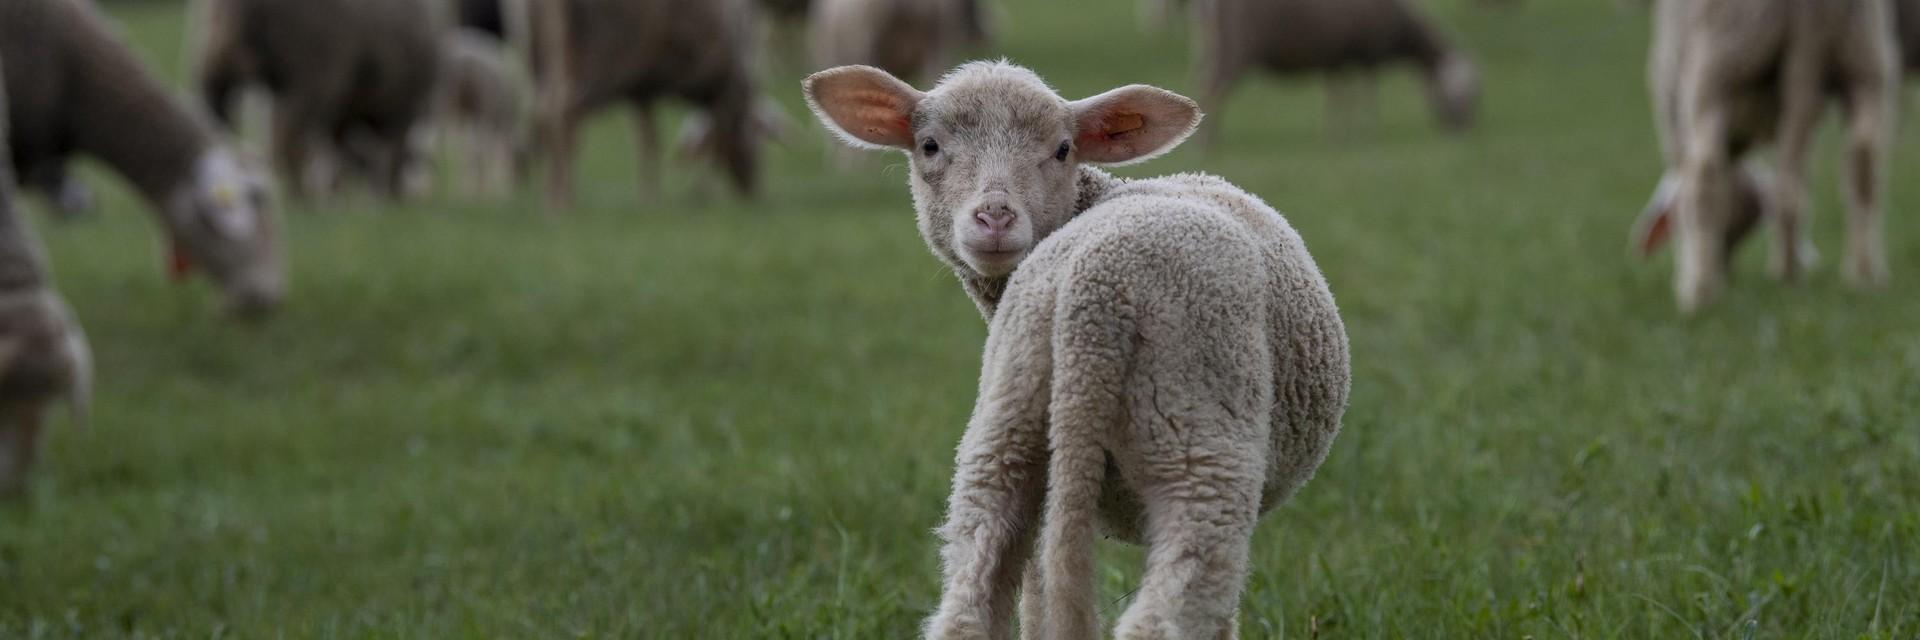 Lamb looking backwards